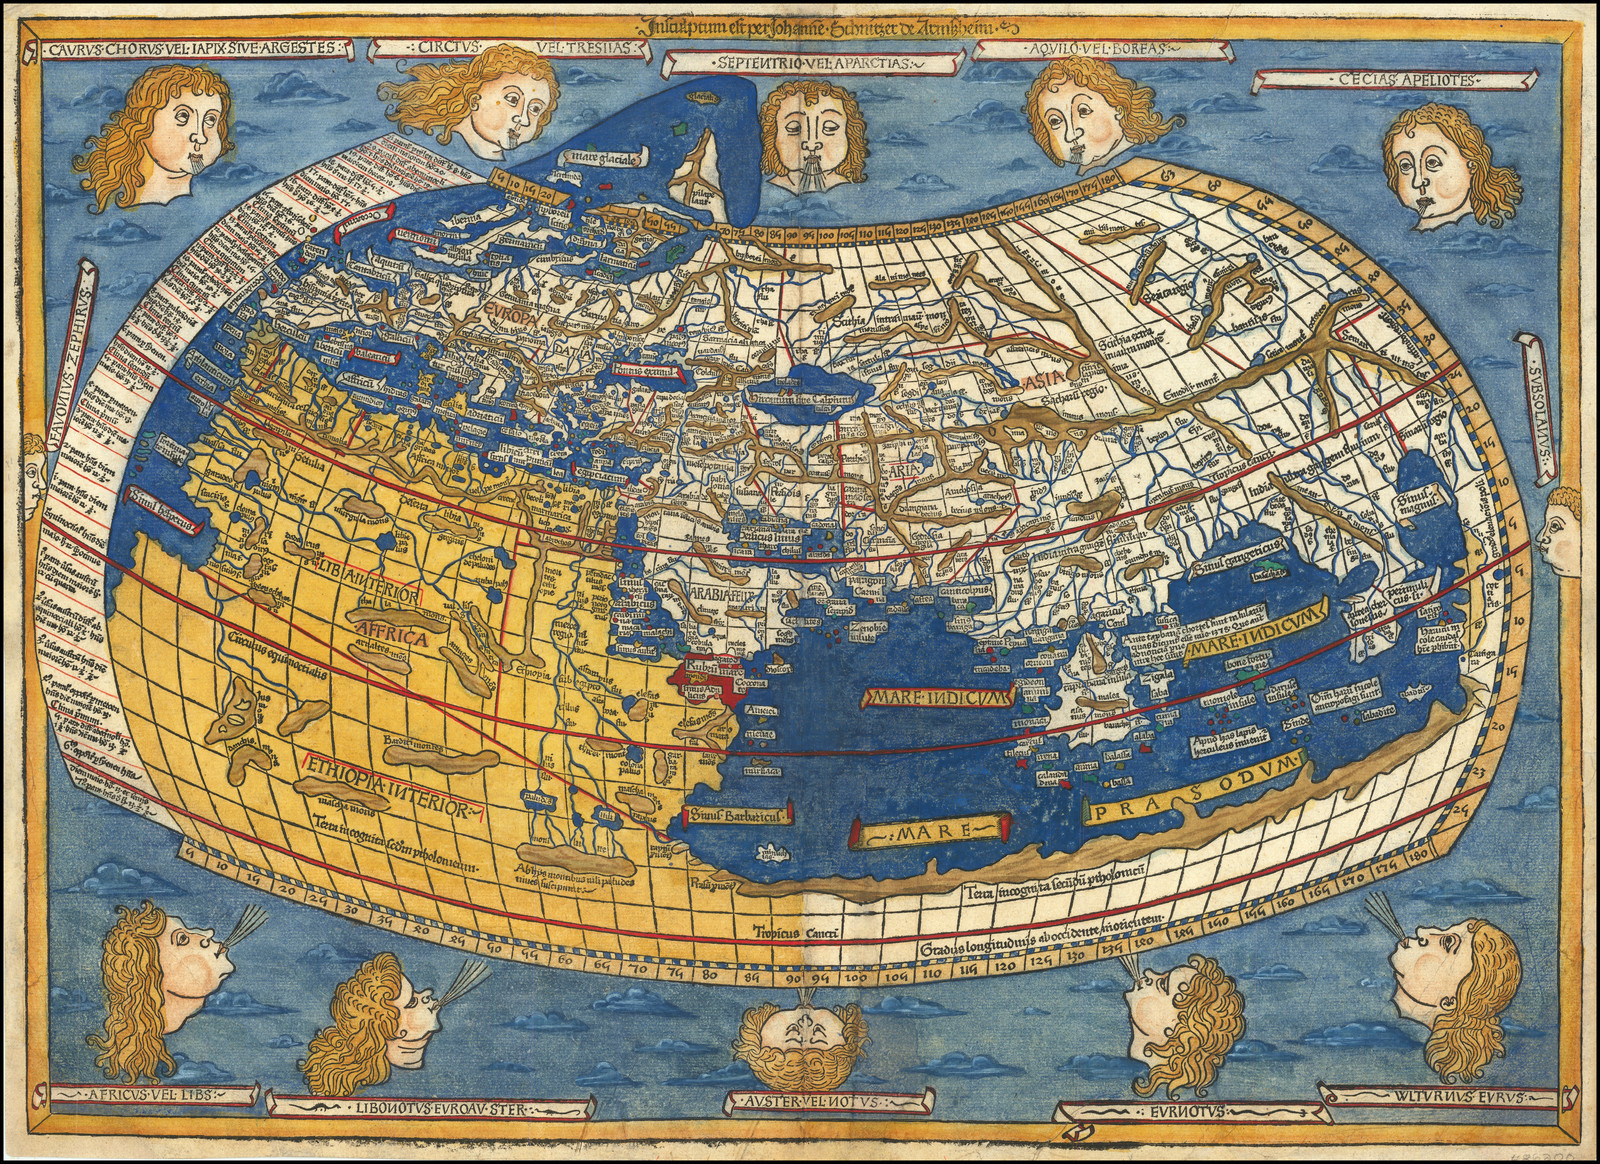 Tableau planisphère mural - world-maps